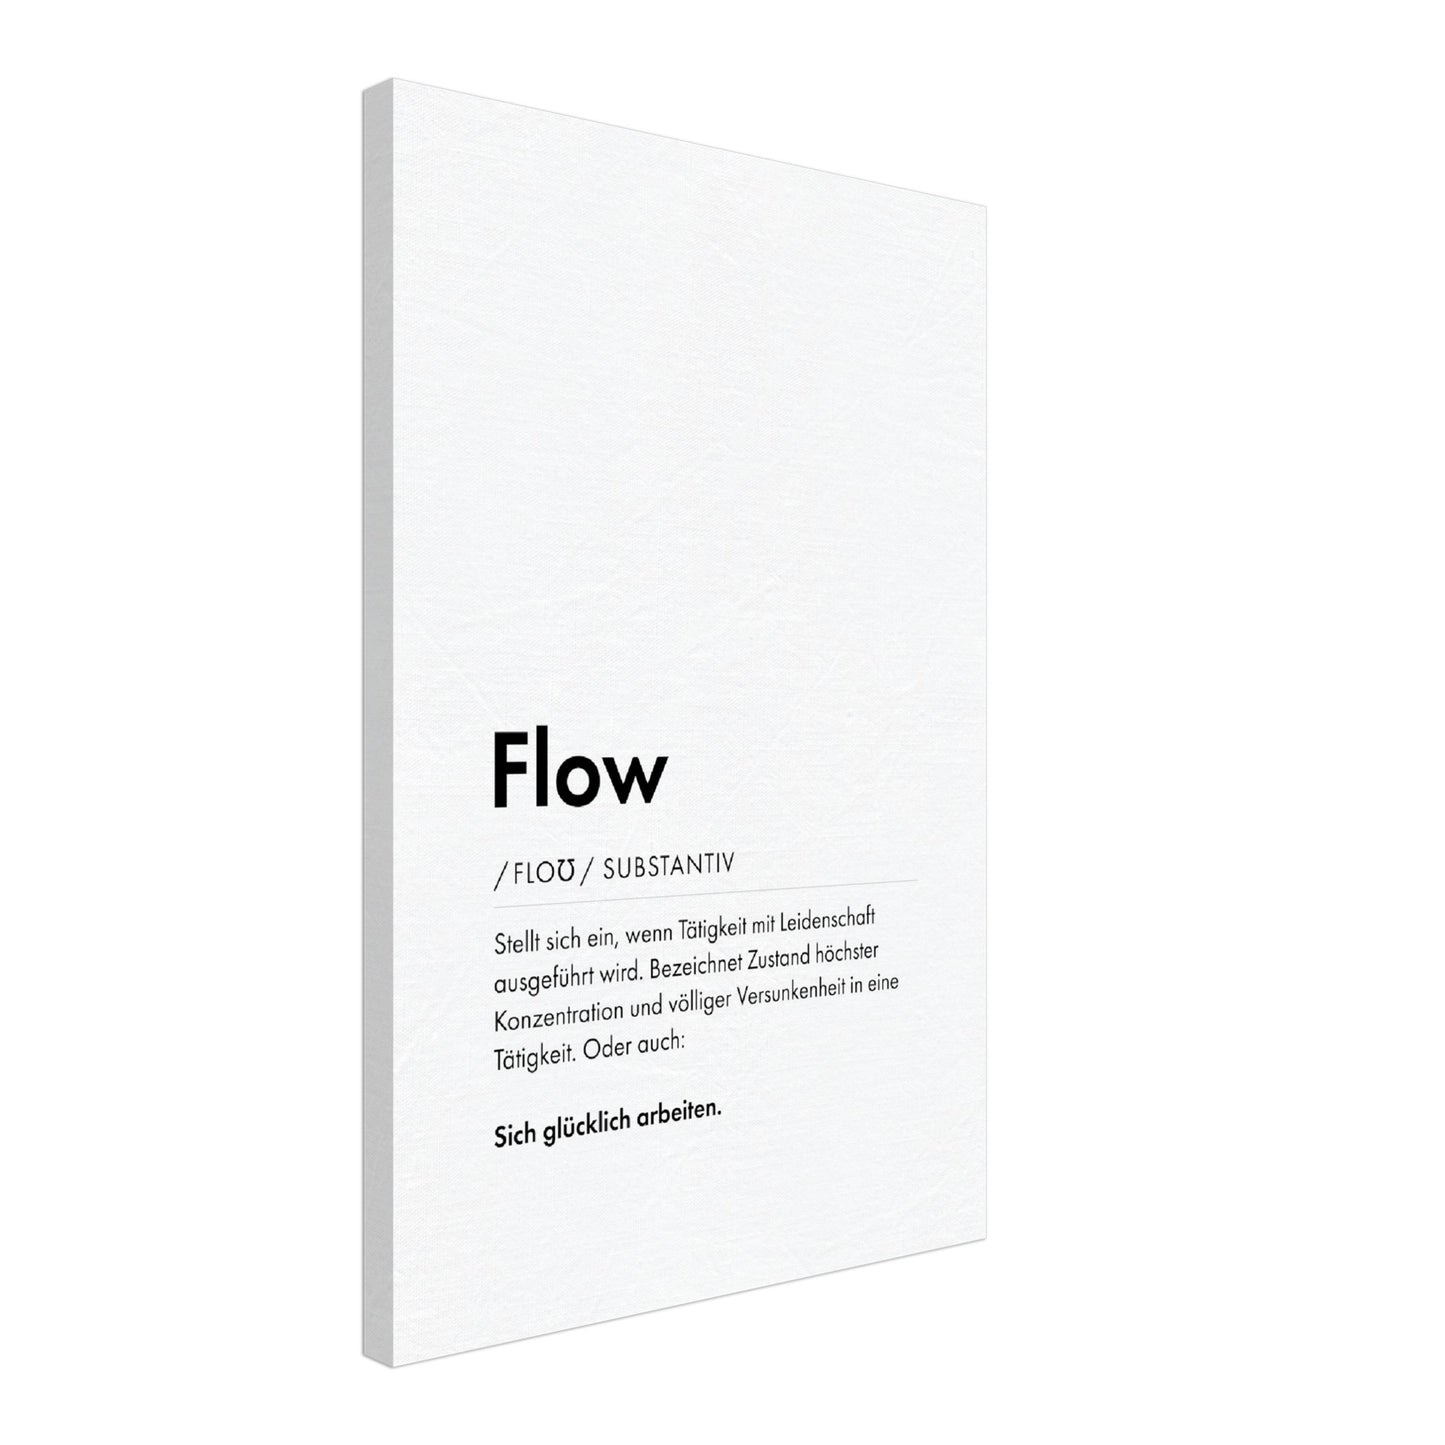 Flow - Wortdefinition-Wandbild - Leinwand Weiss Neutral im Hochformat - Typografie Worte Sprache Business Job